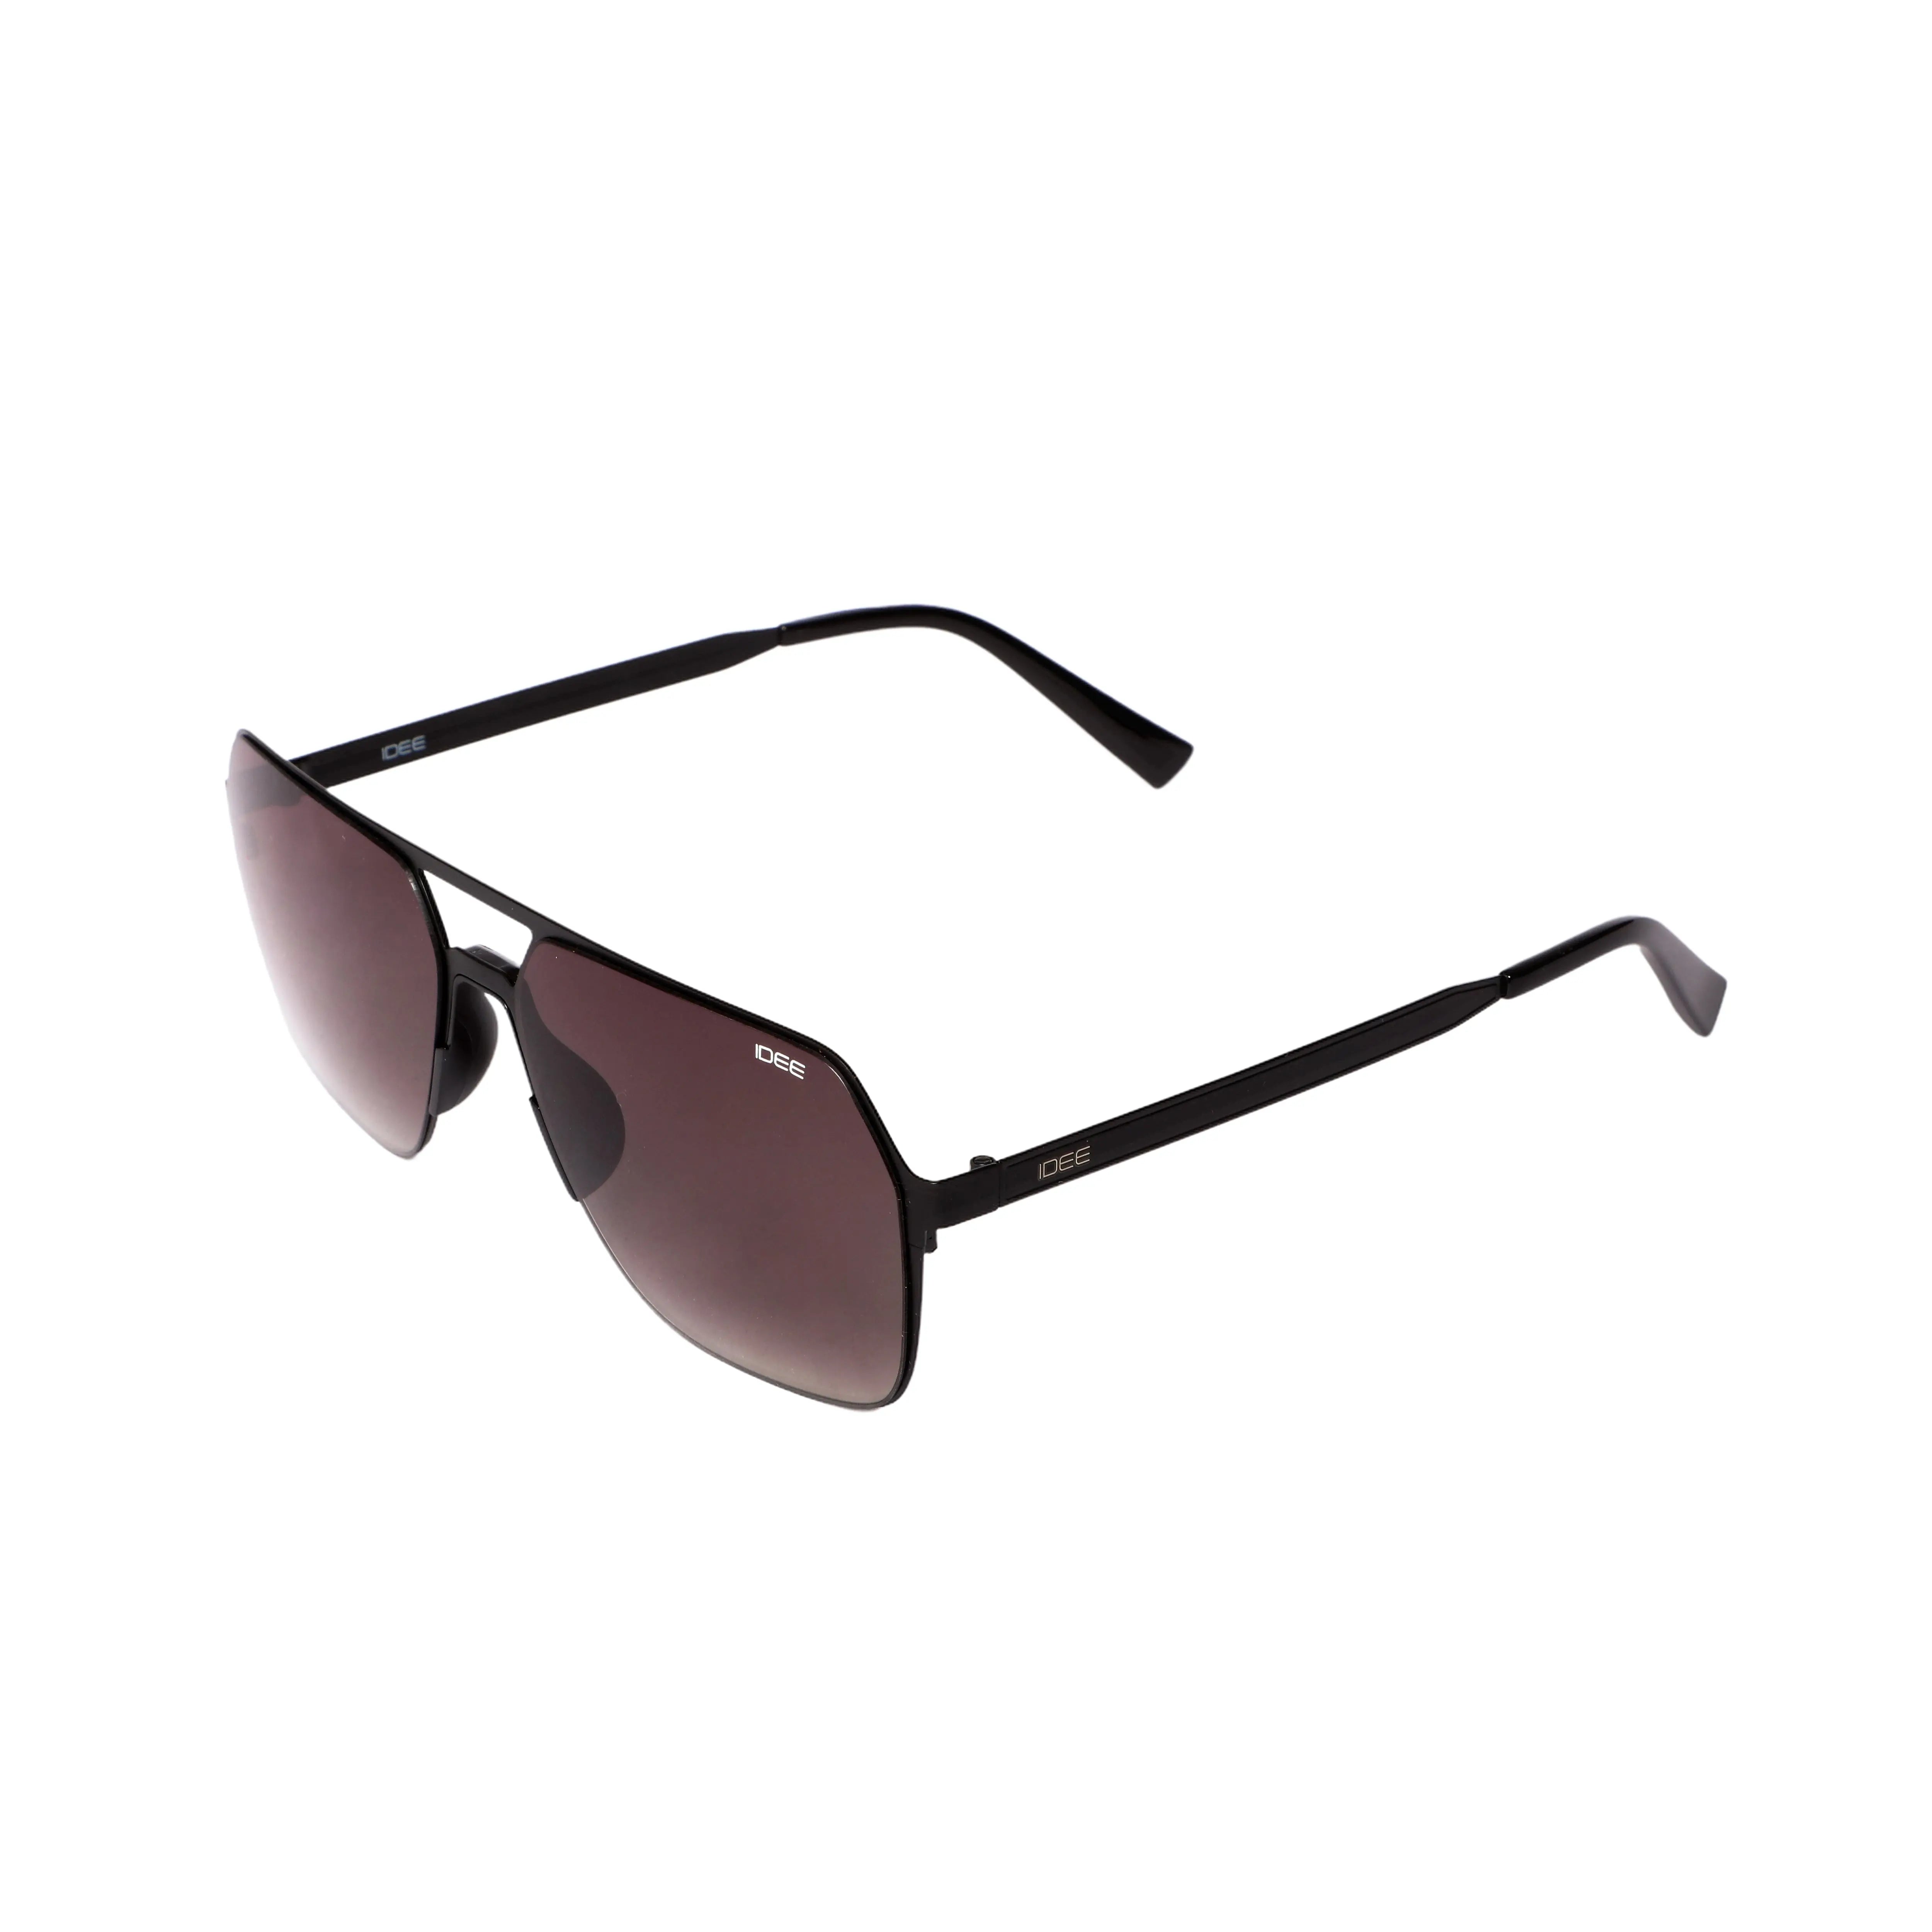 IDEE-S3006--C1 Sunglasses - Premium Sunglasses from IDEE - Just Rs. 3740! Shop now at Laxmi Opticians